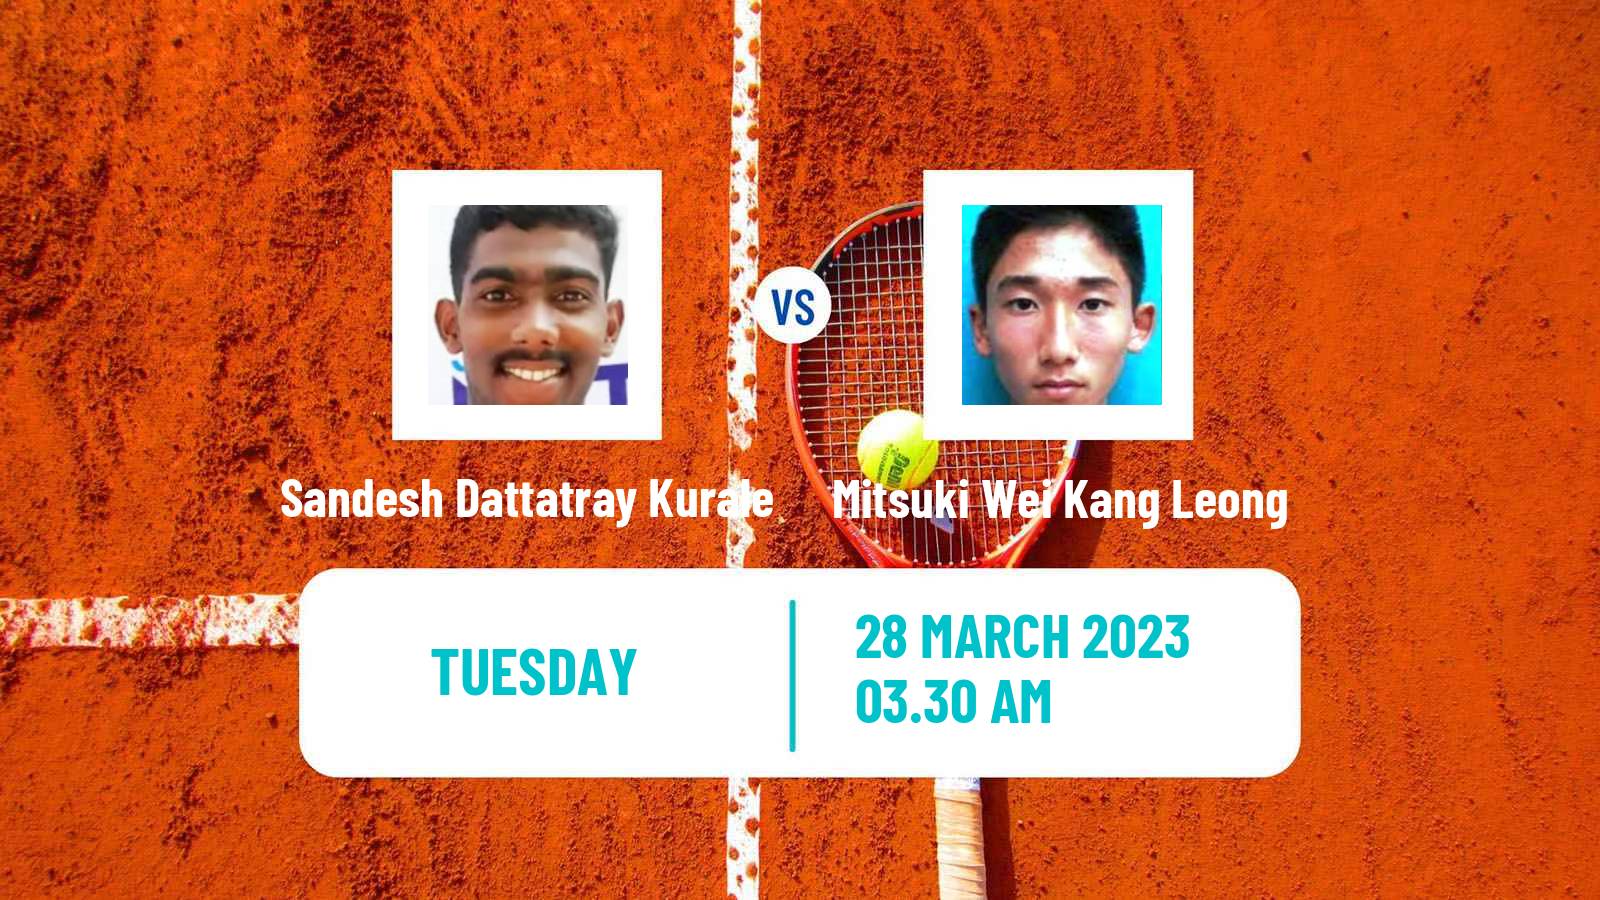 Tennis ITF Tournaments Sandesh Dattatray Kurale - Mitsuki Wei Kang Leong